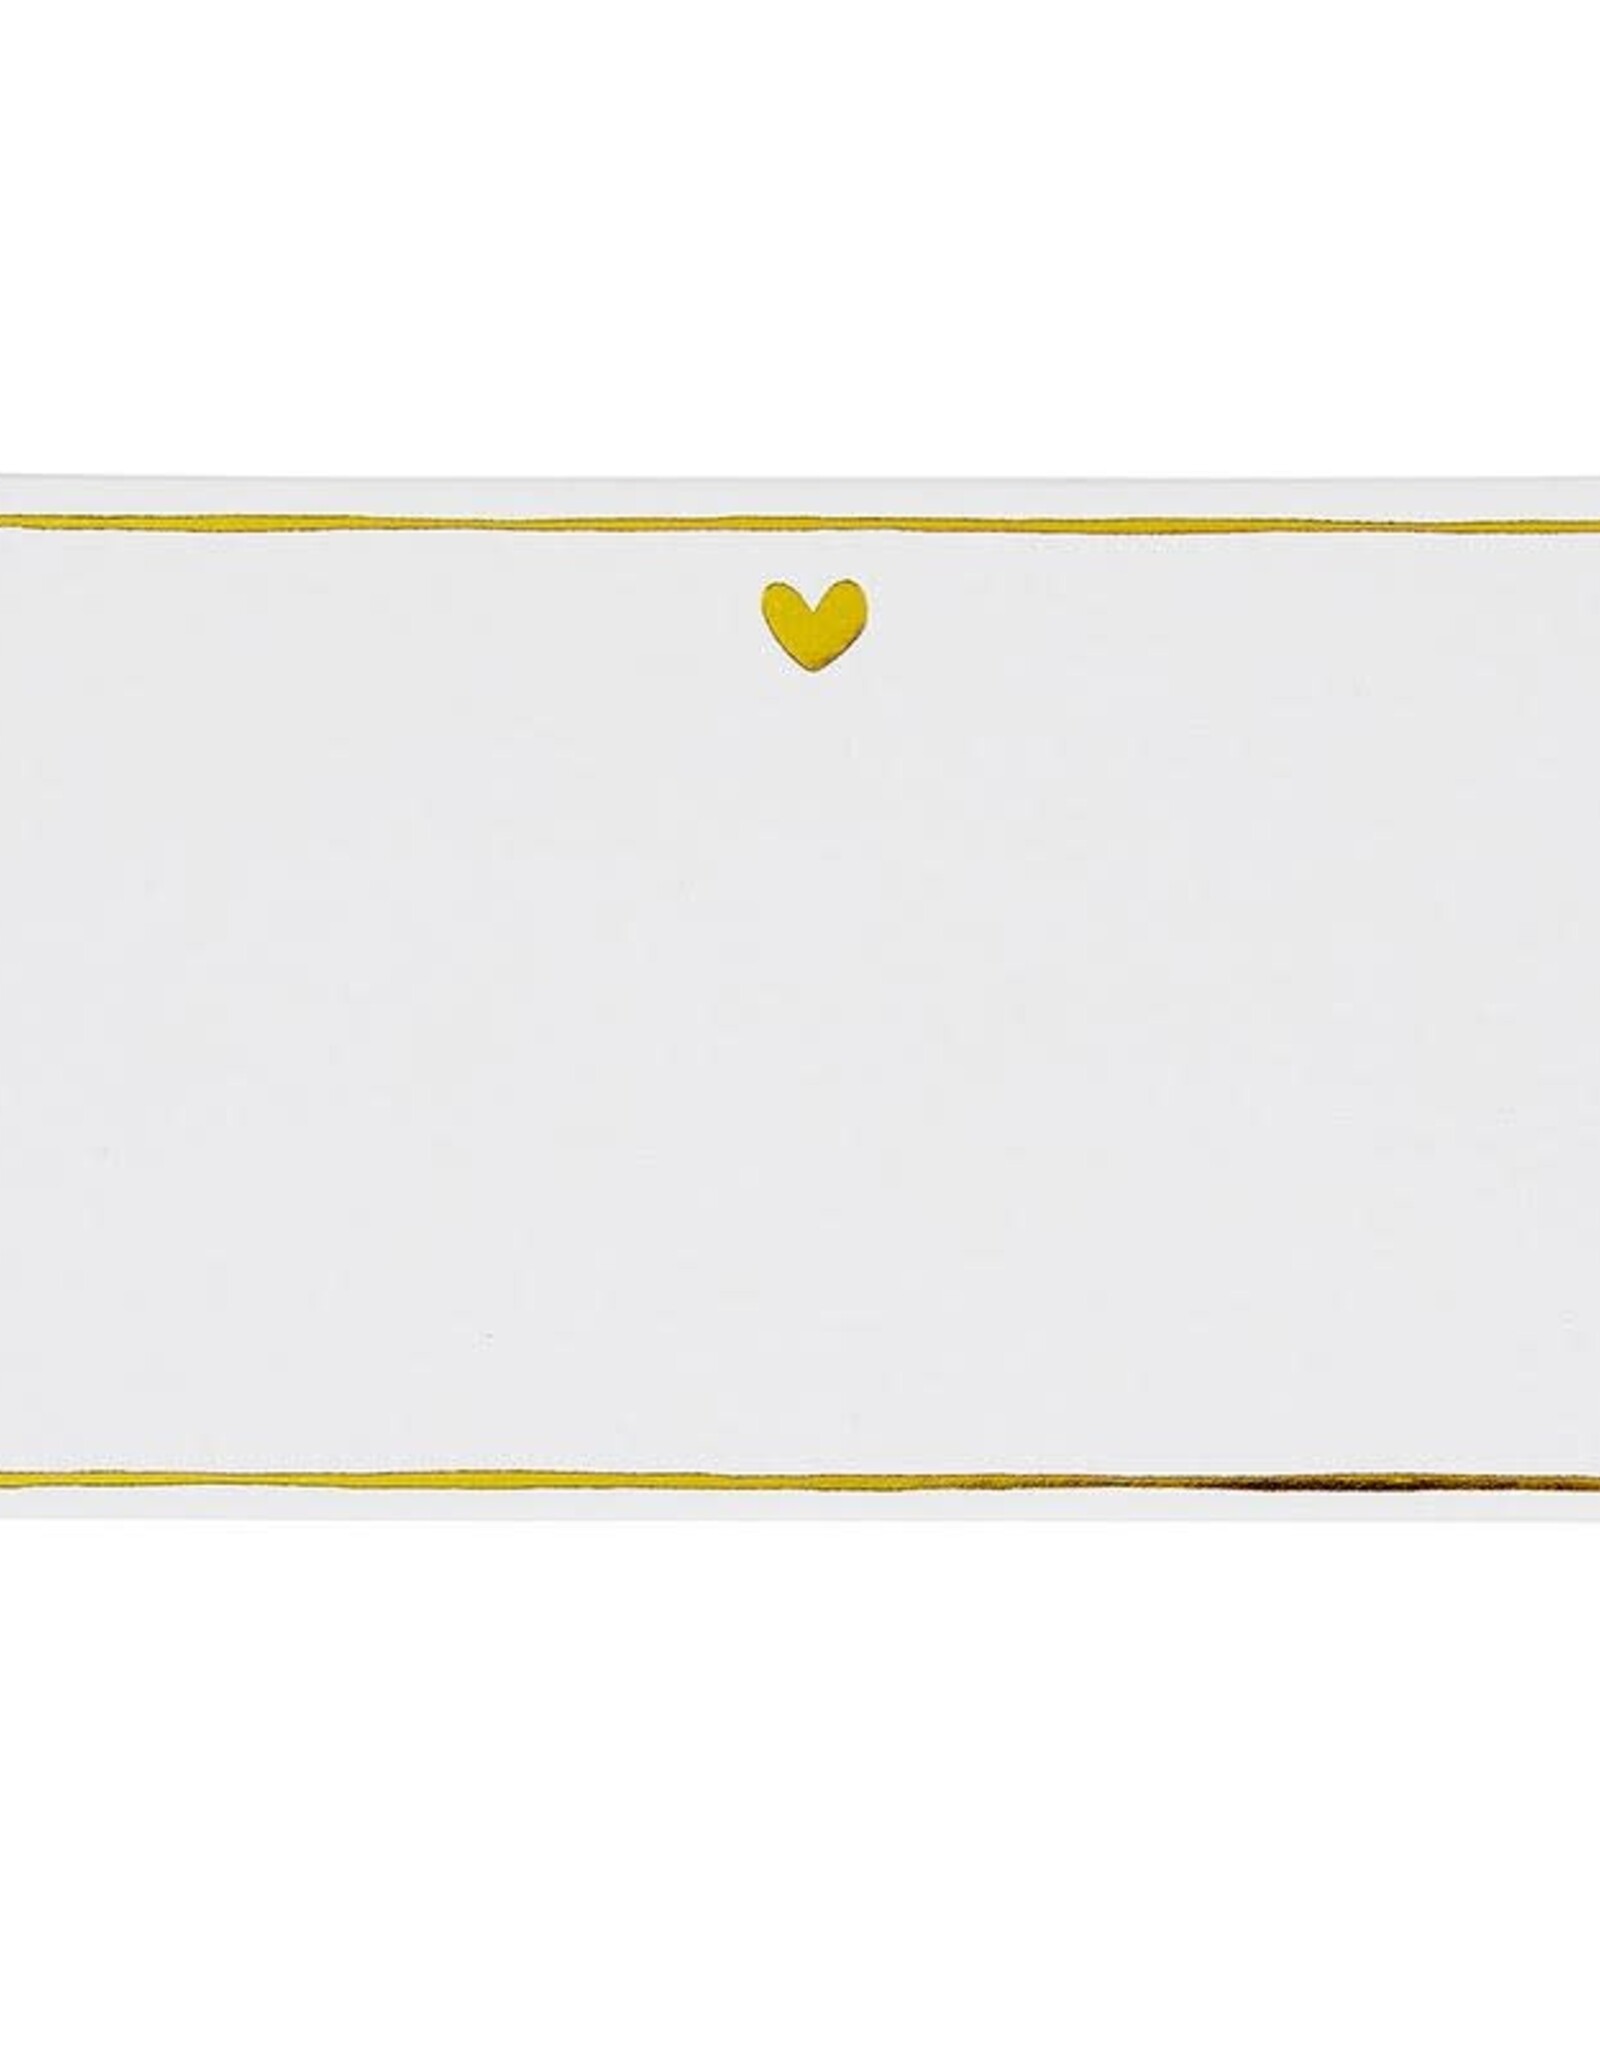 Gold Foil Place Cards - Heart